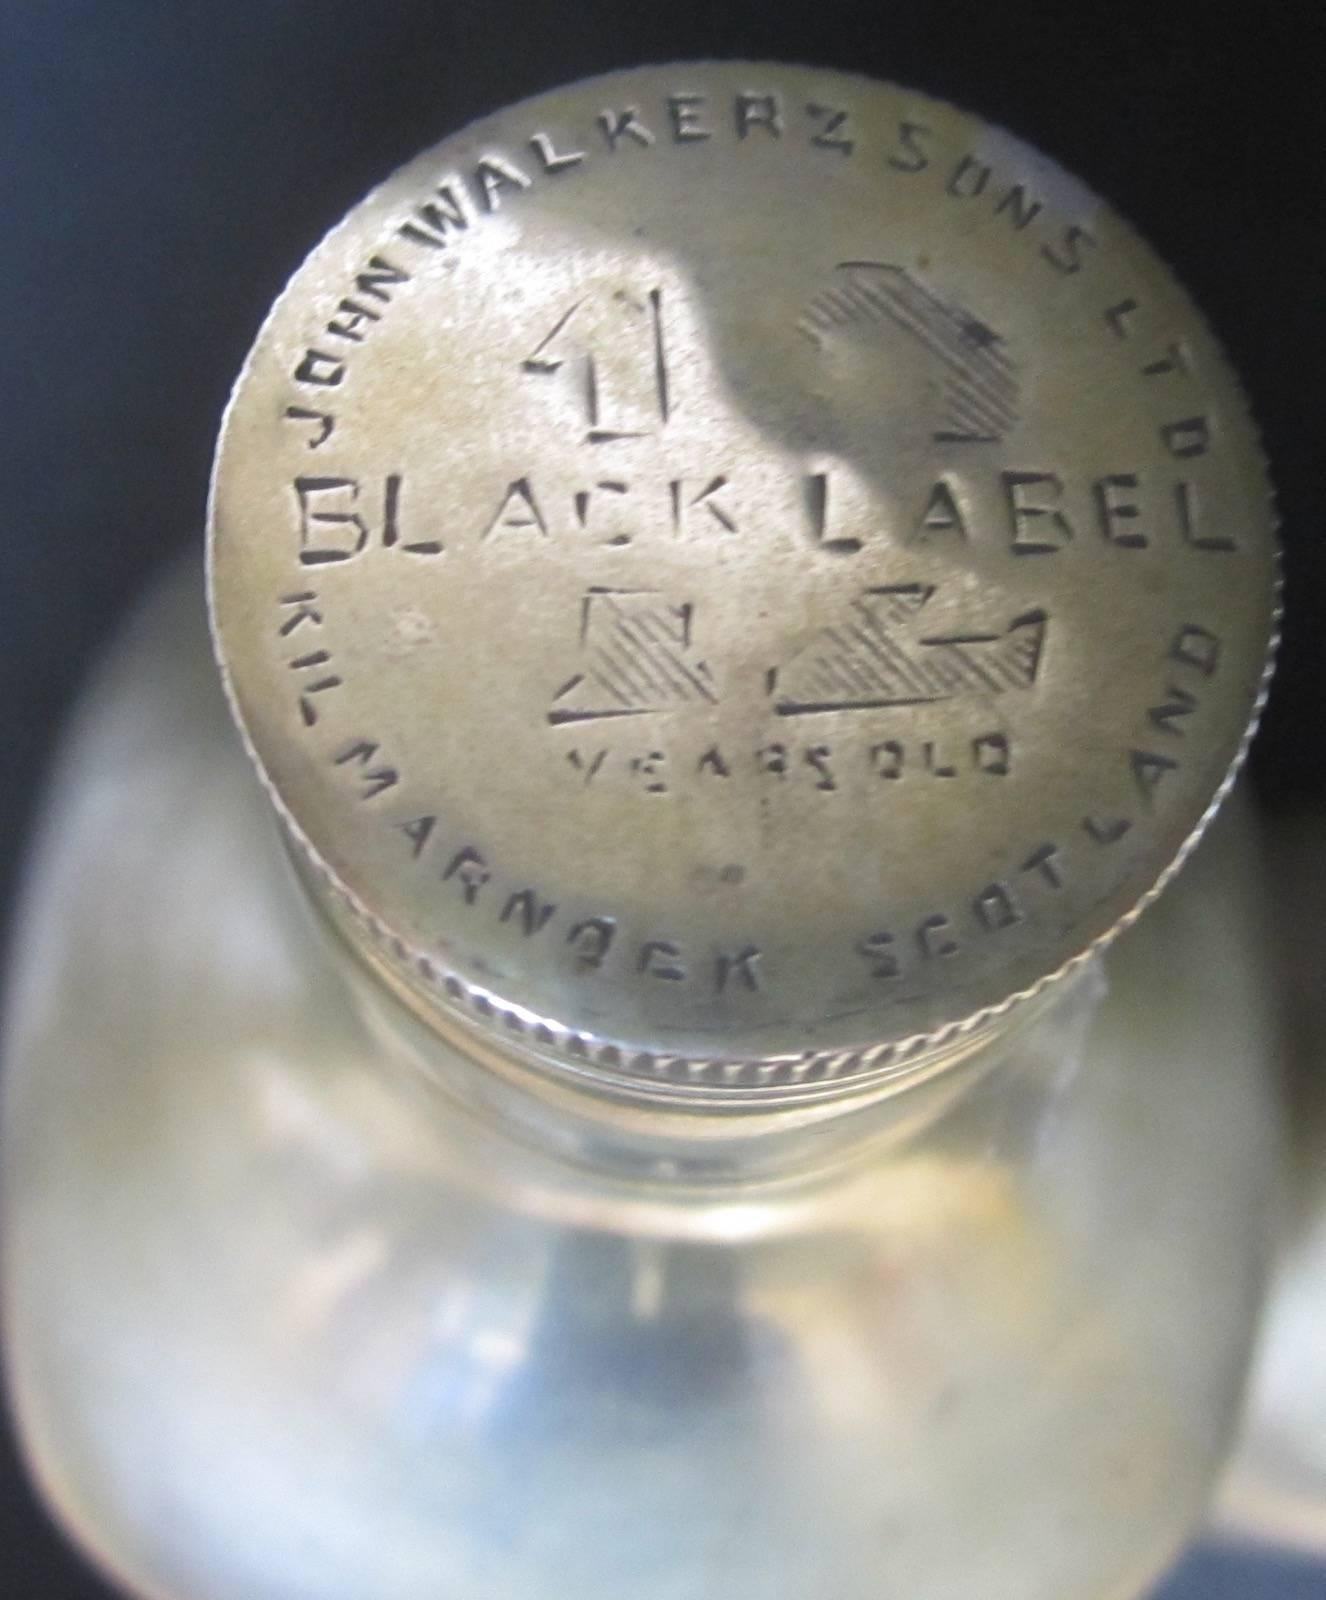 black label silver bottle